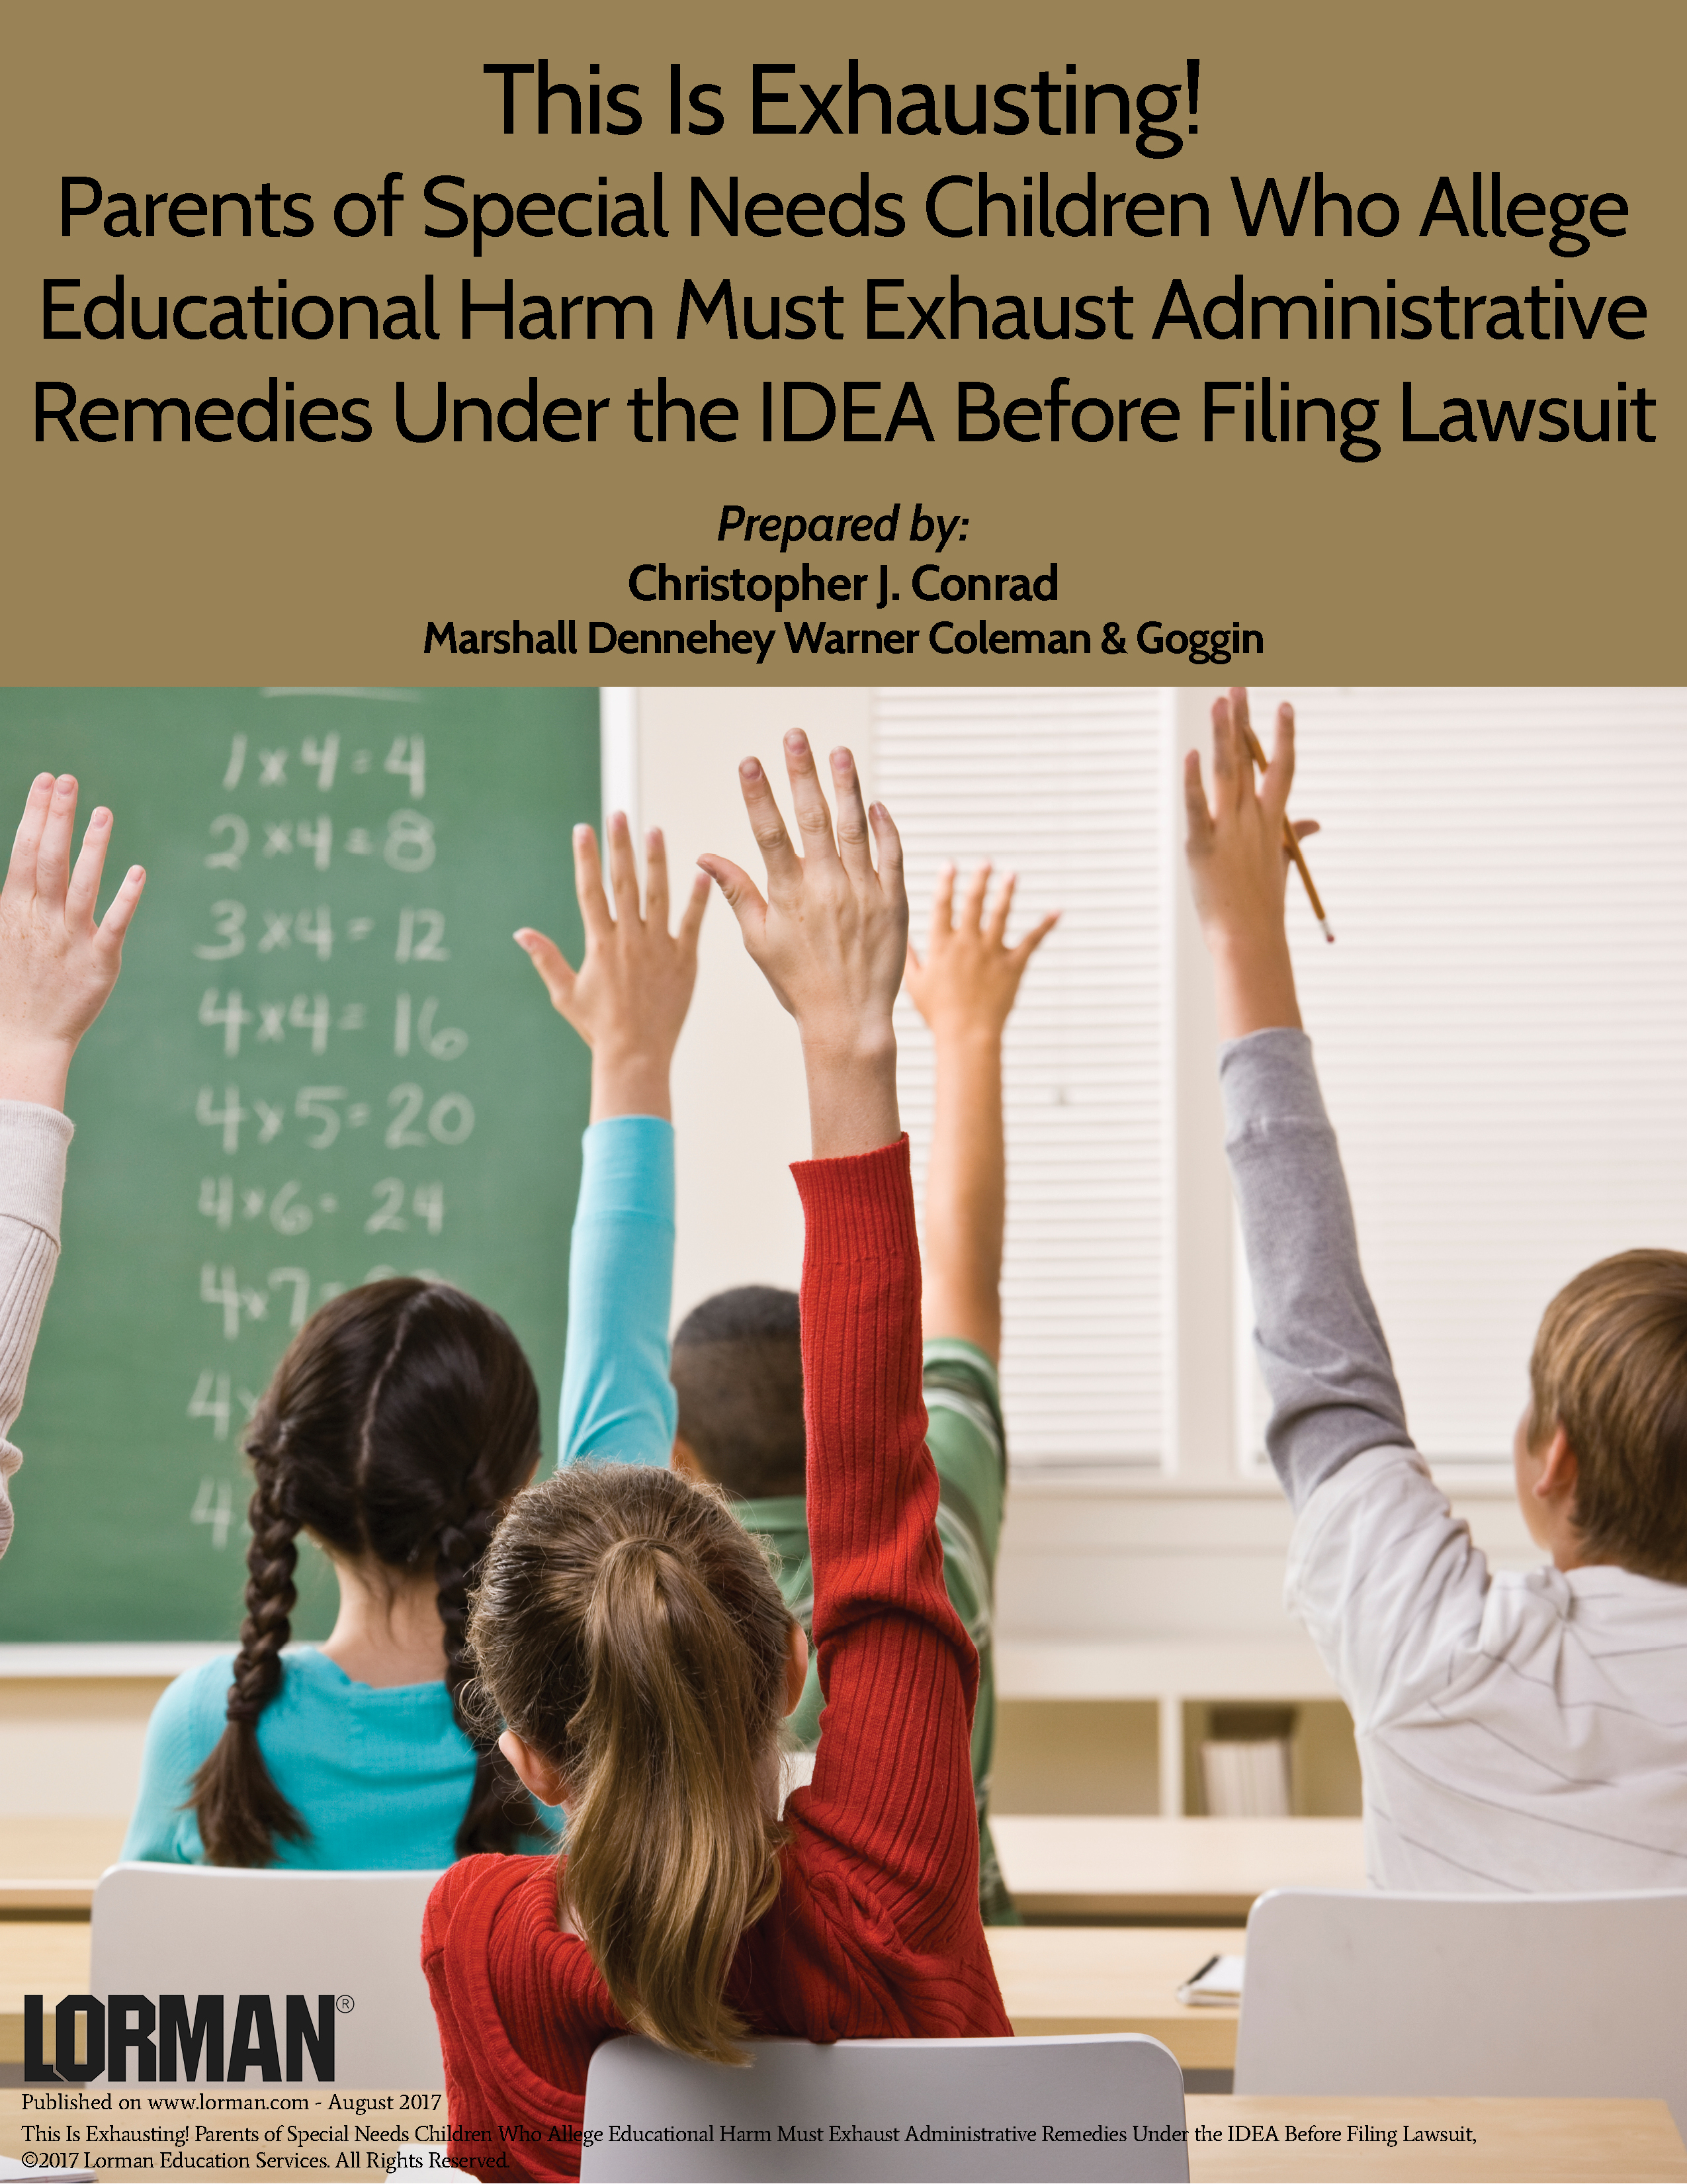 Parents Alleging Educational Harm Must Exhaust Administrative Remedies Under IDEA Before Lawsuit